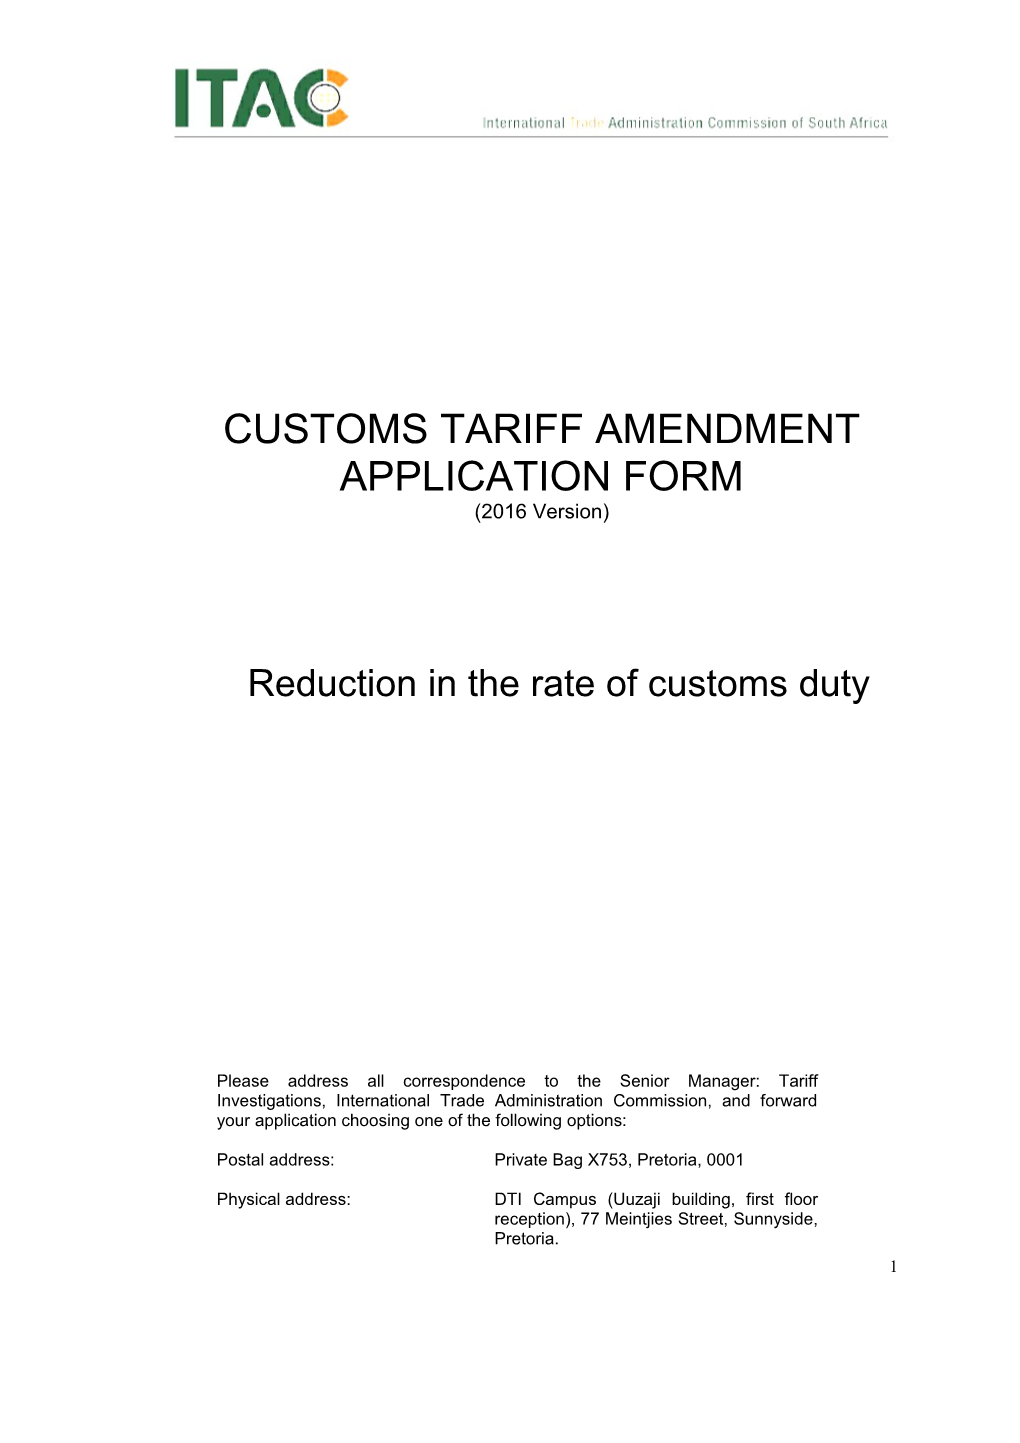 Customs Tariff Amendment Application Form